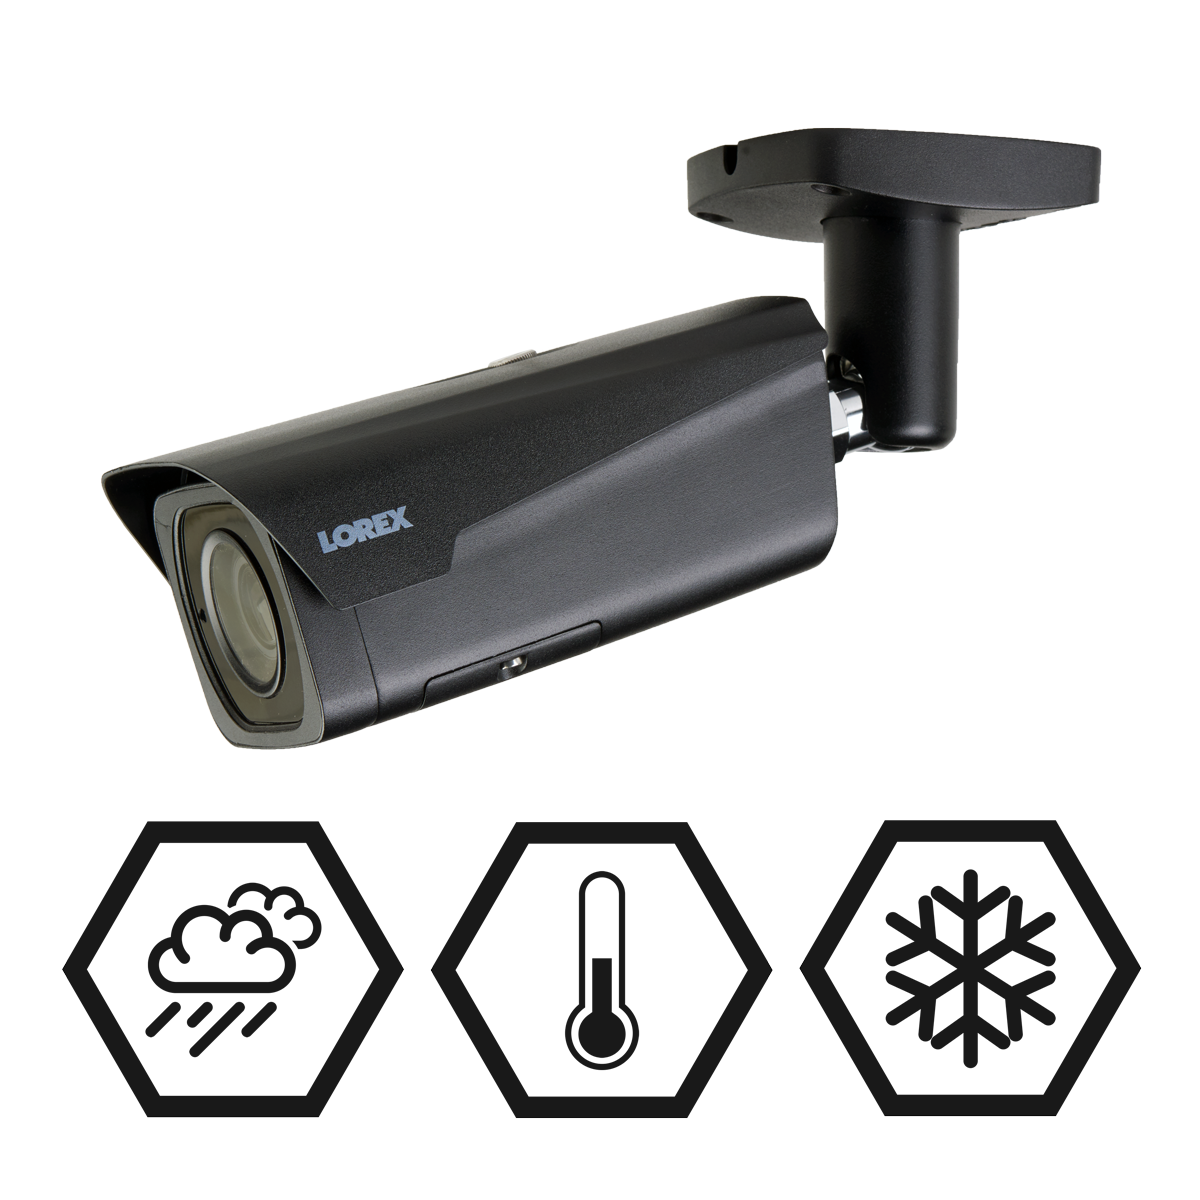 4K nocturnal weatherproof security camera 